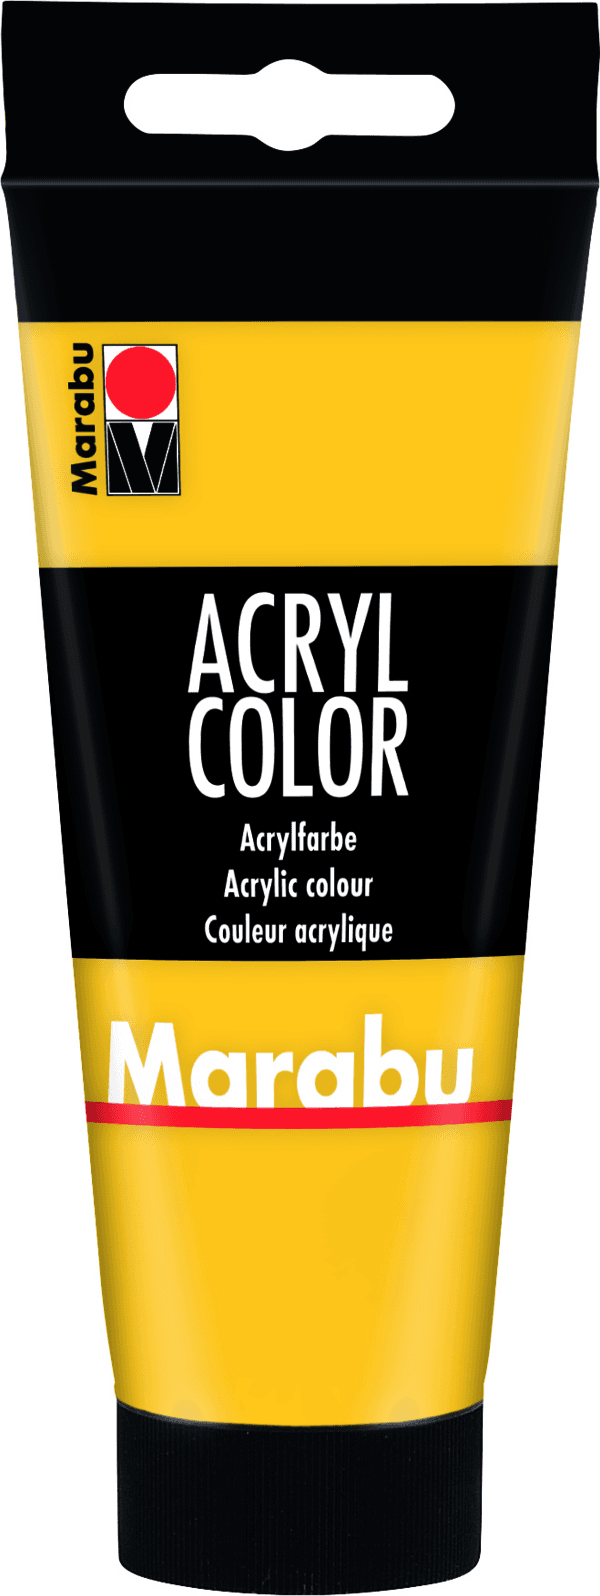 Marabu Akrilna boja, 100ml, Žuta